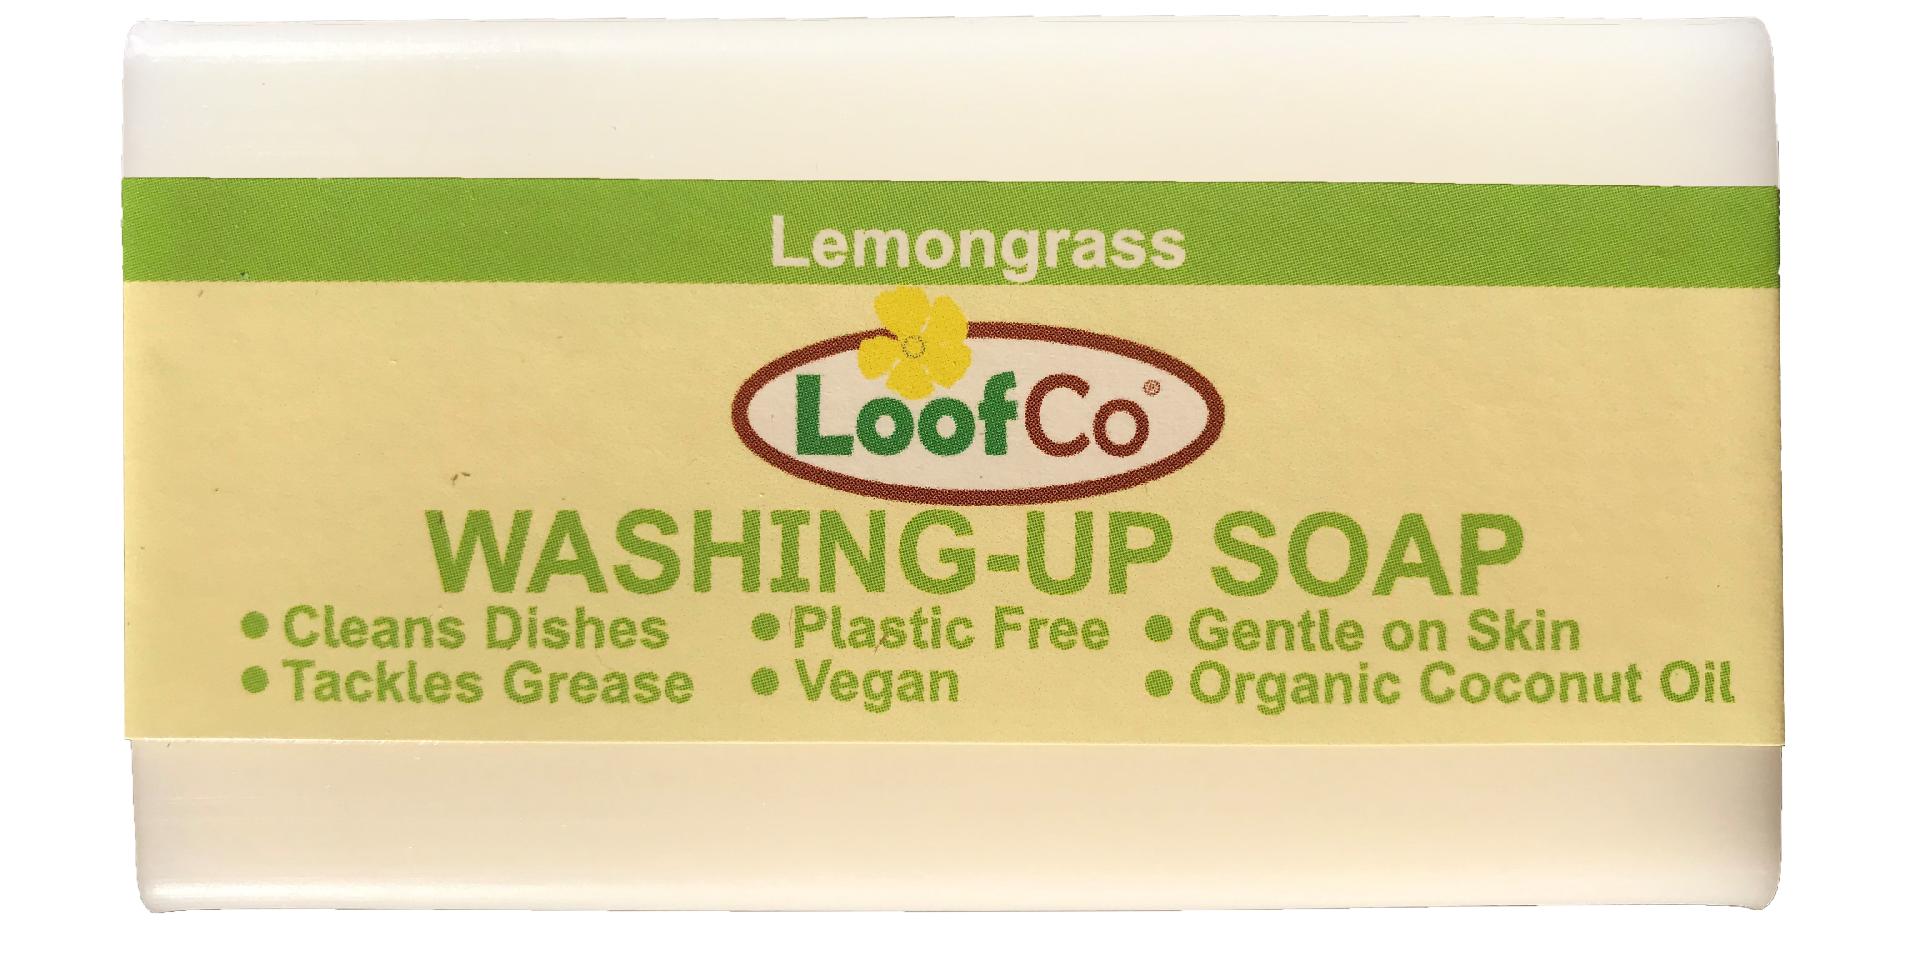 Sapun solid pentru vase, cu lemongrass, LoofCo,100 g